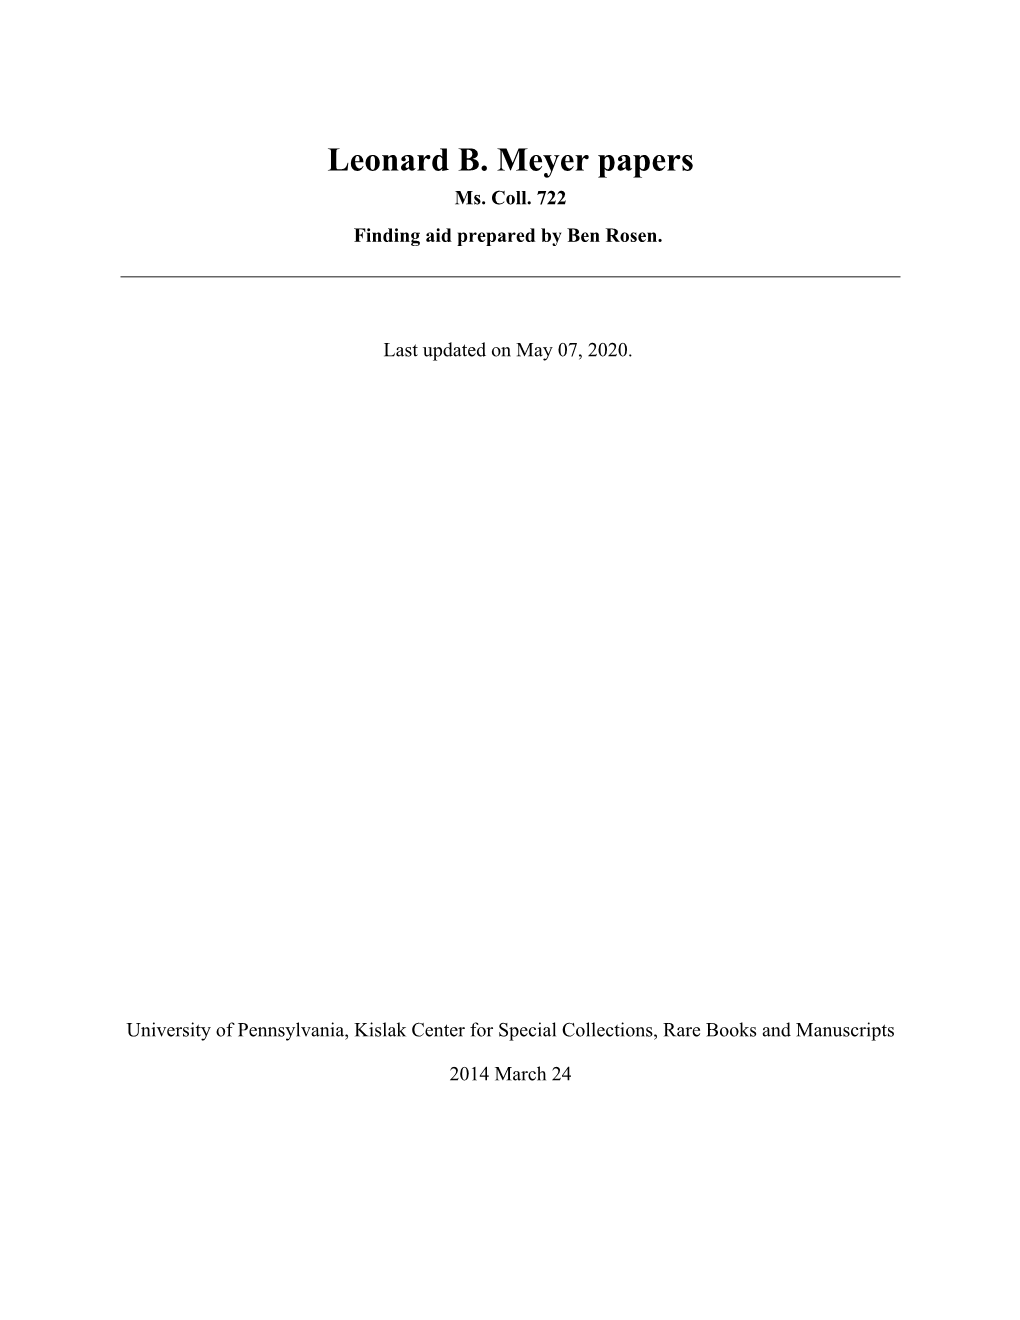 Leonard B. Meyer Papers Ms